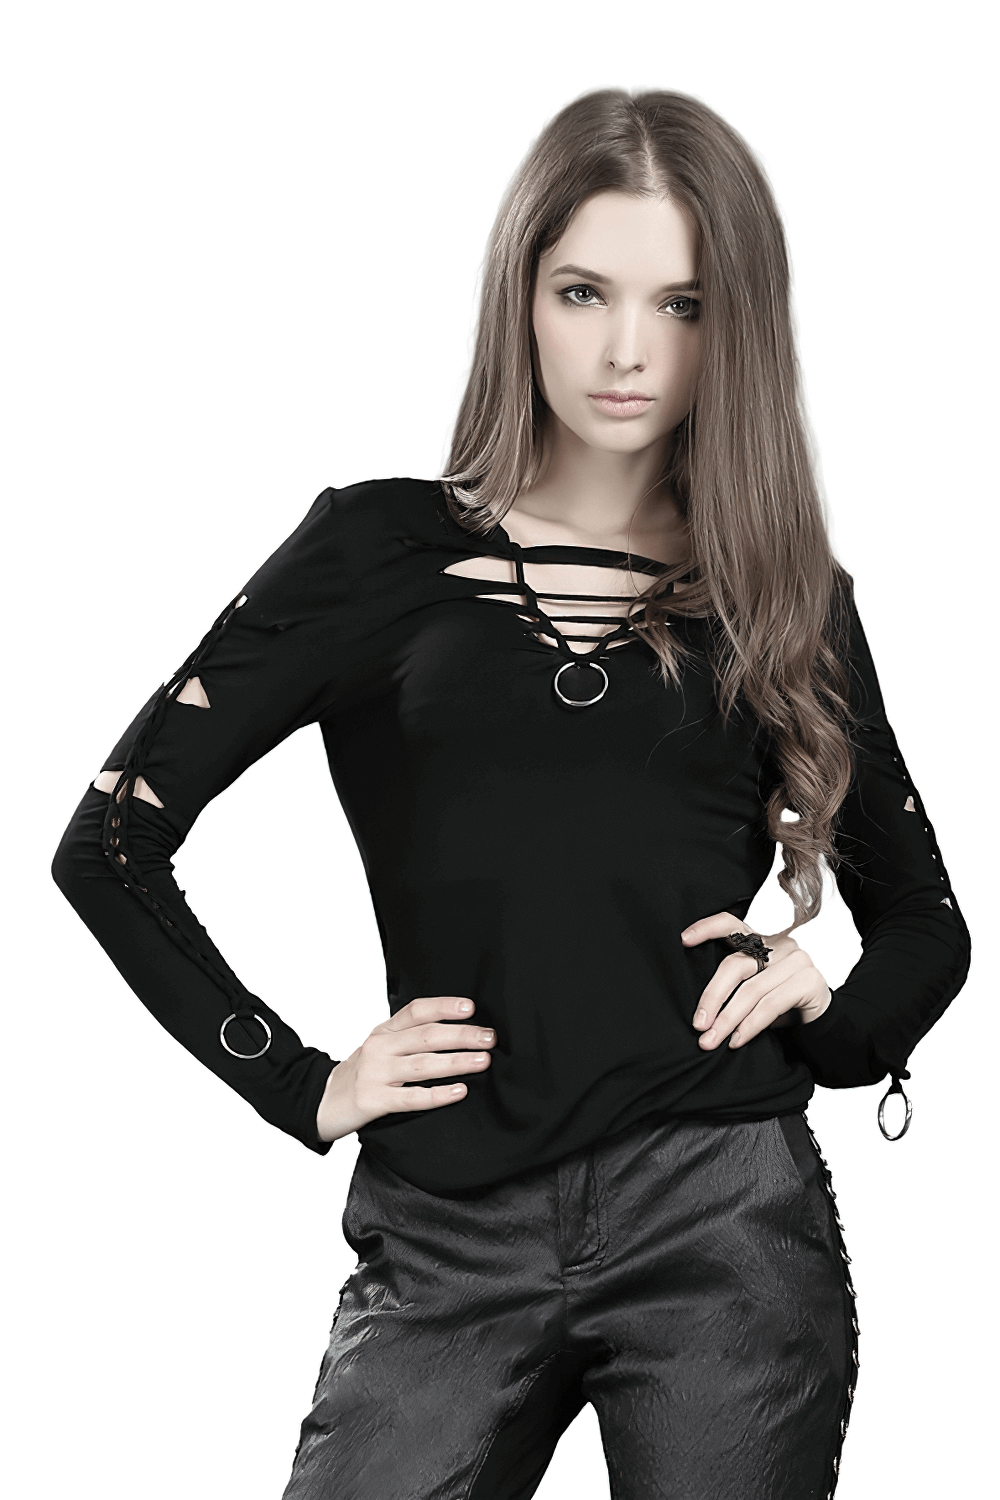 Gothic Women's Long Sleeves Twisted Sweatshirt